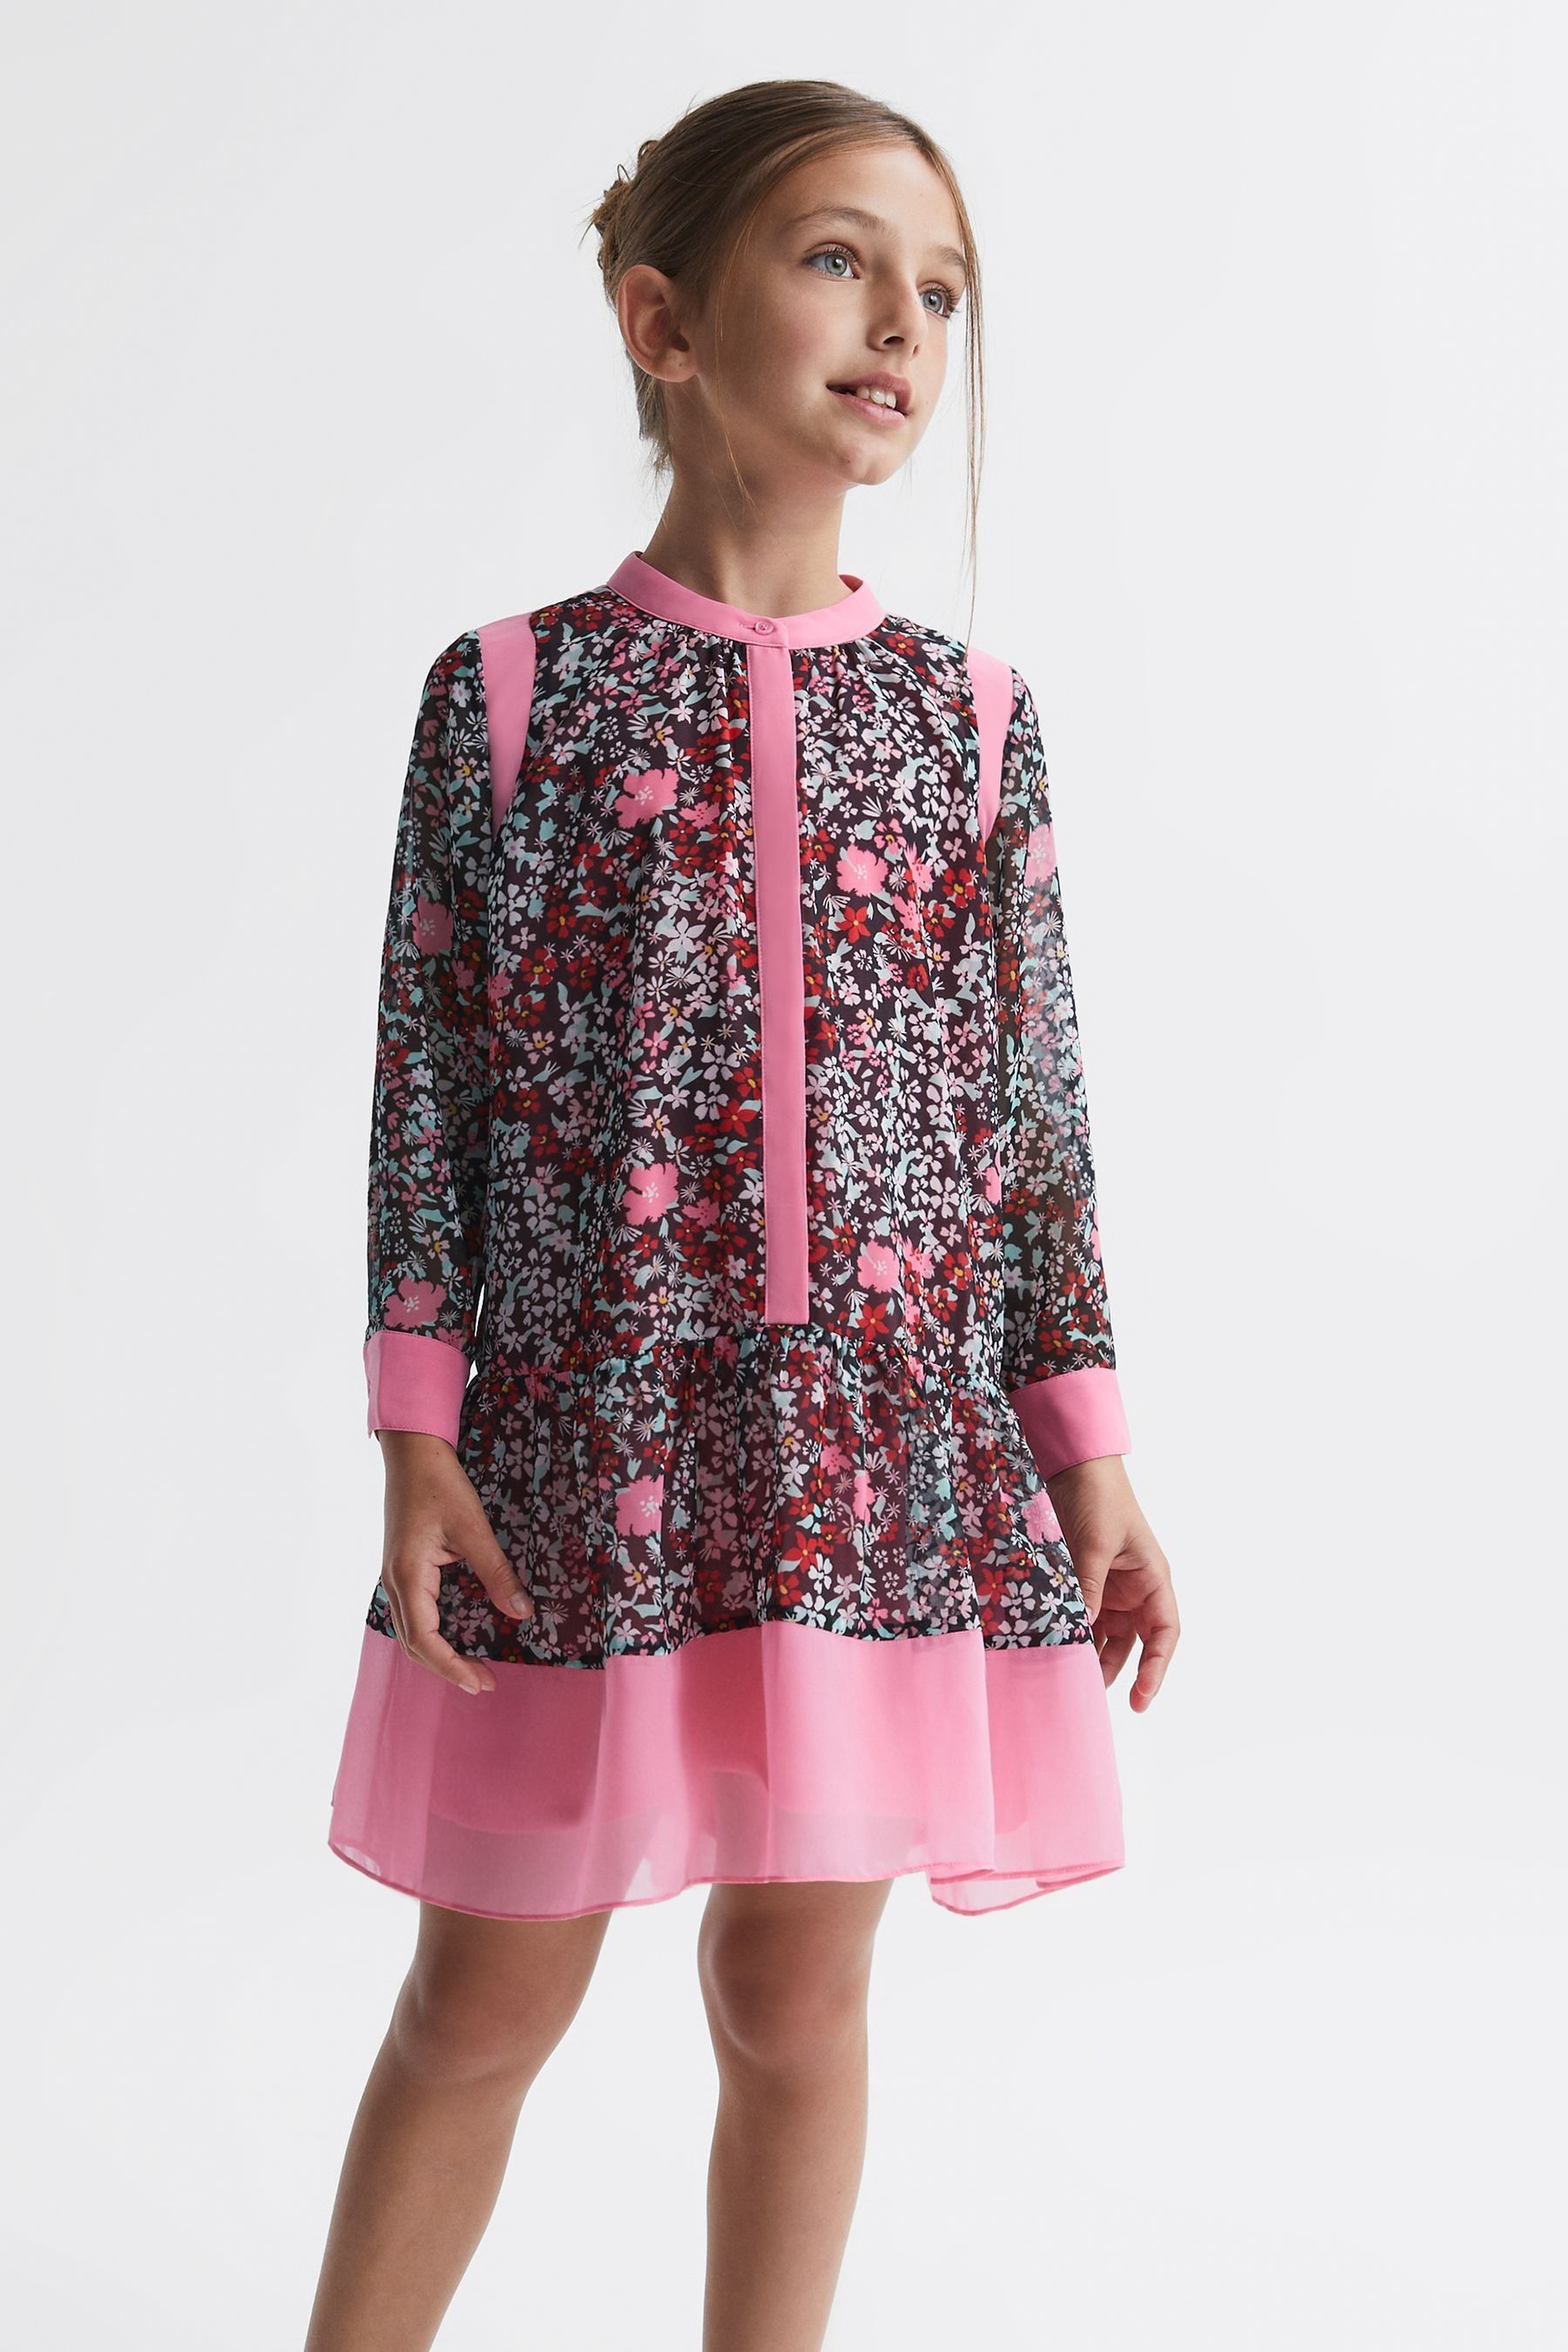 Reiss Kids' Camilla - Pink Junior Floral Print Contrast Dress, Uk 7-8 Yrs